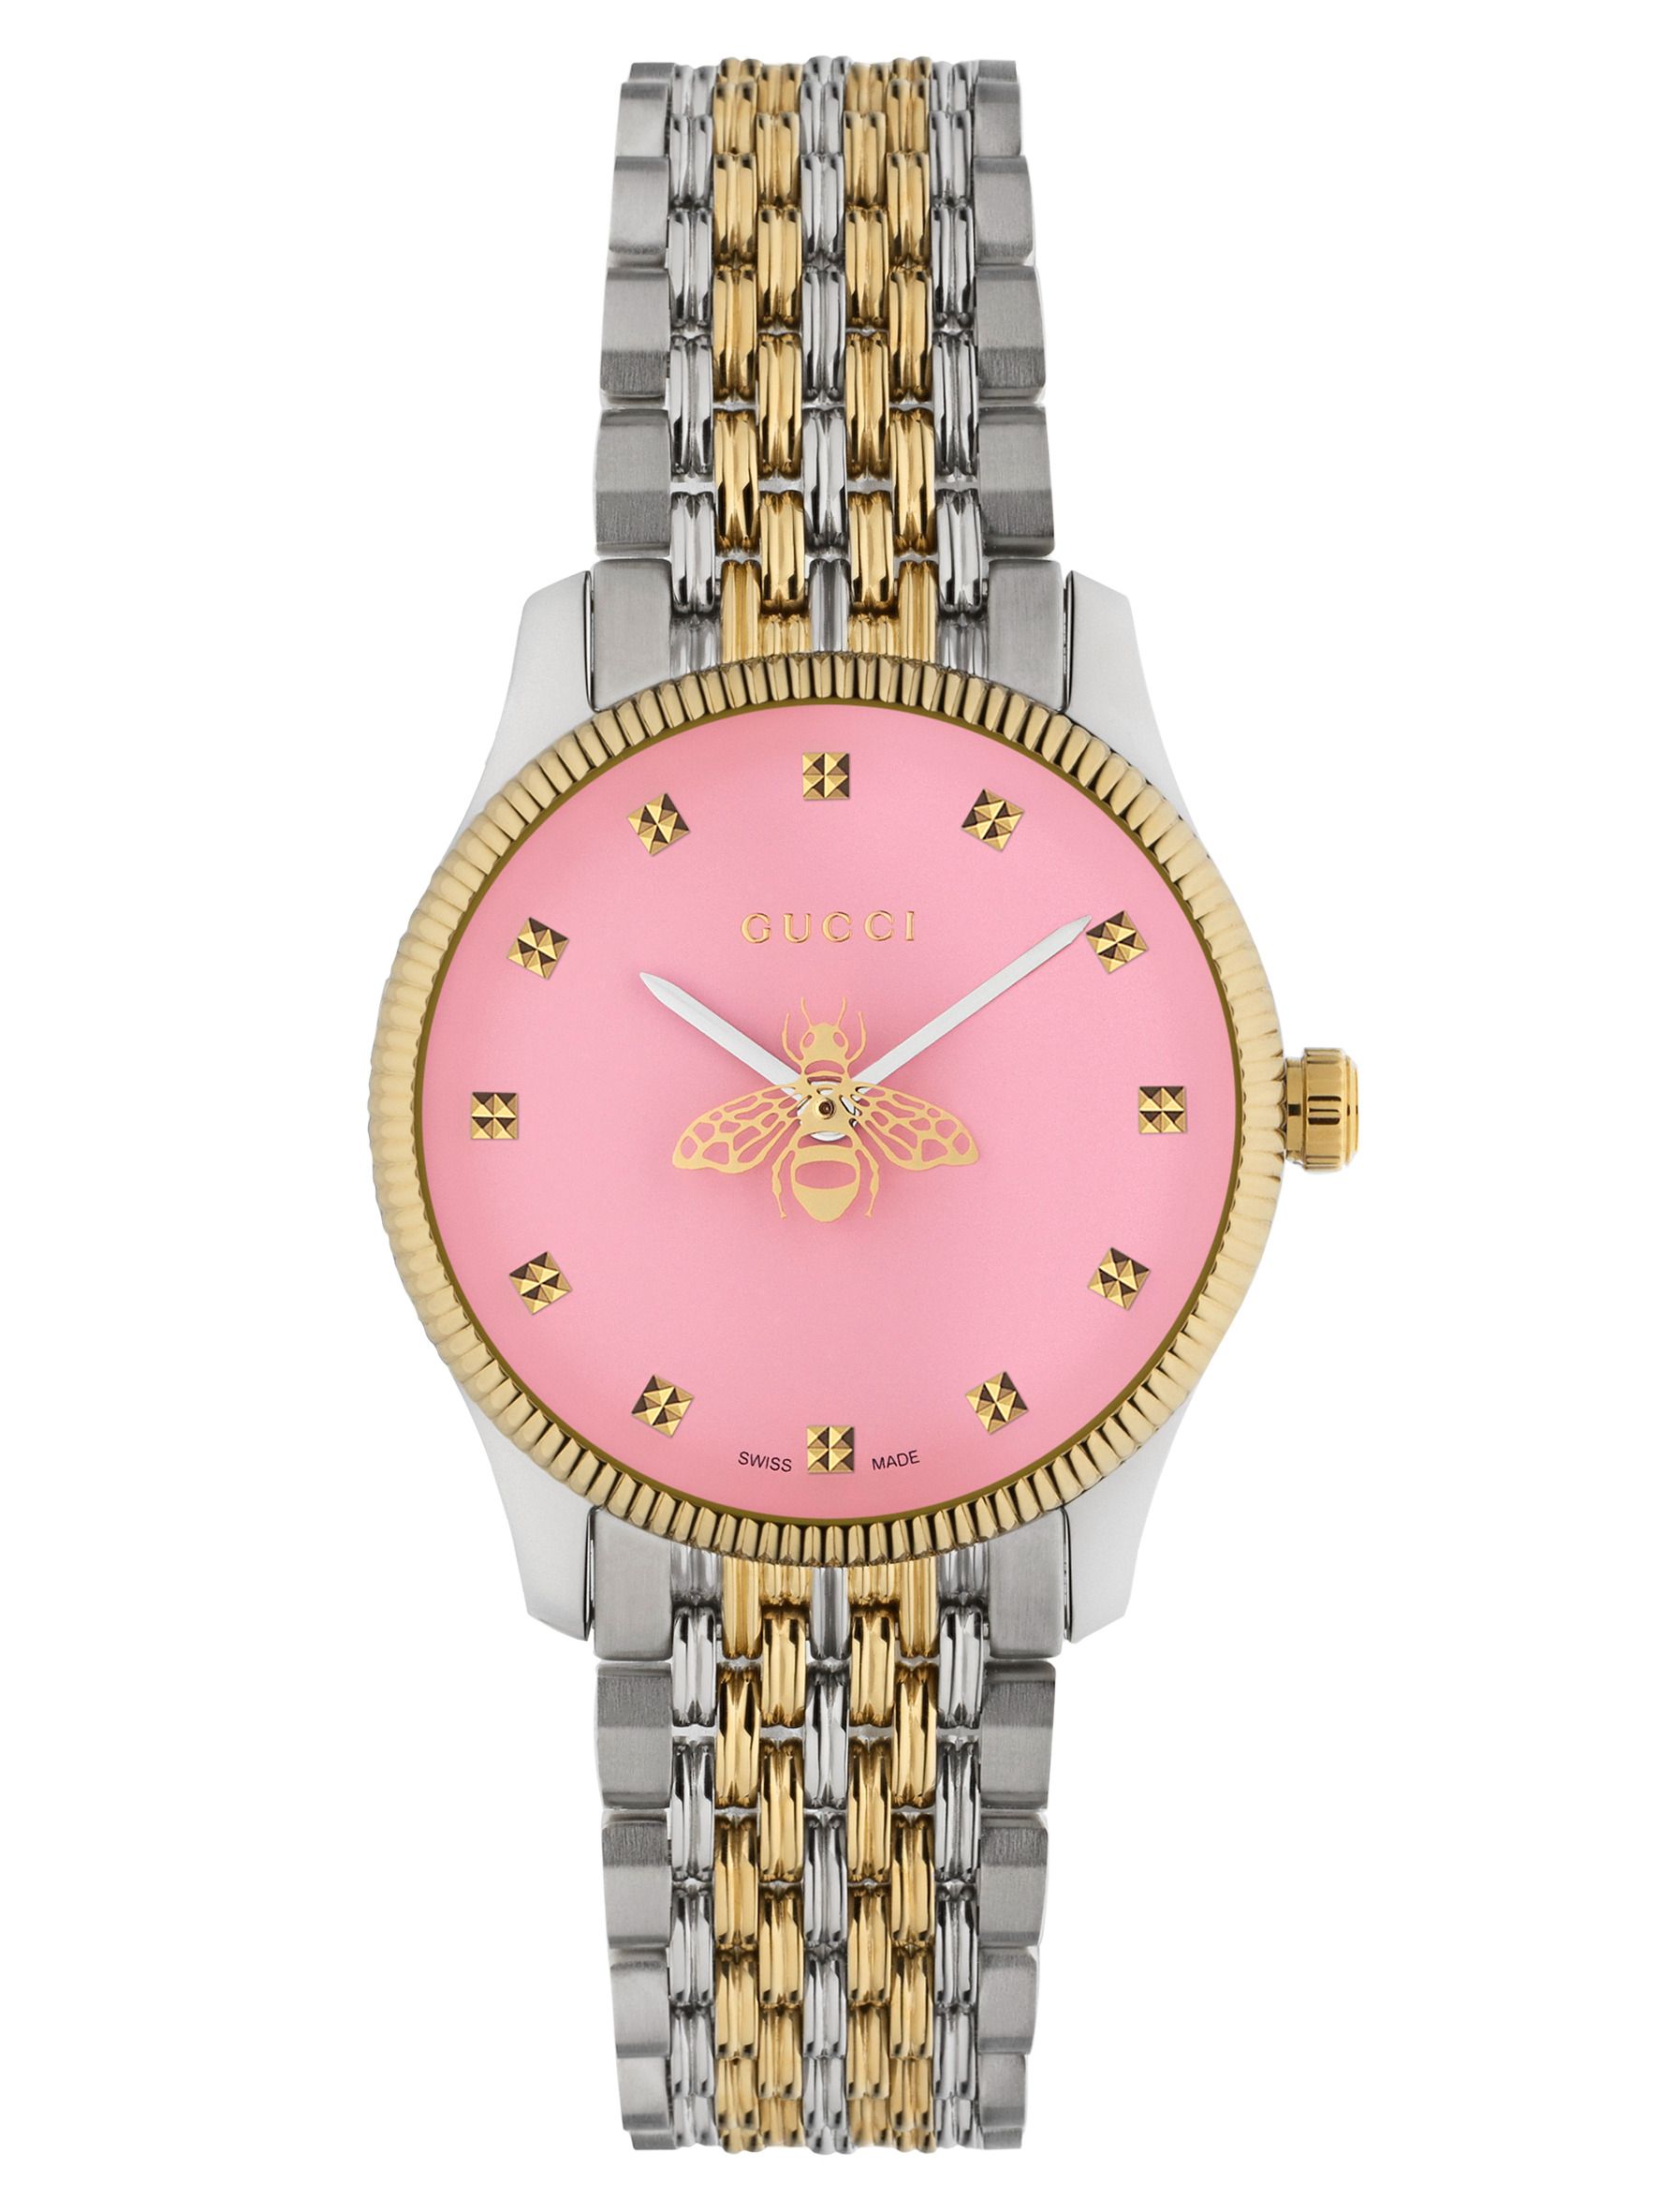 GUCCI Timepieces & Jewelry G-Timeless Slim (29毫米) 腕表.jpg